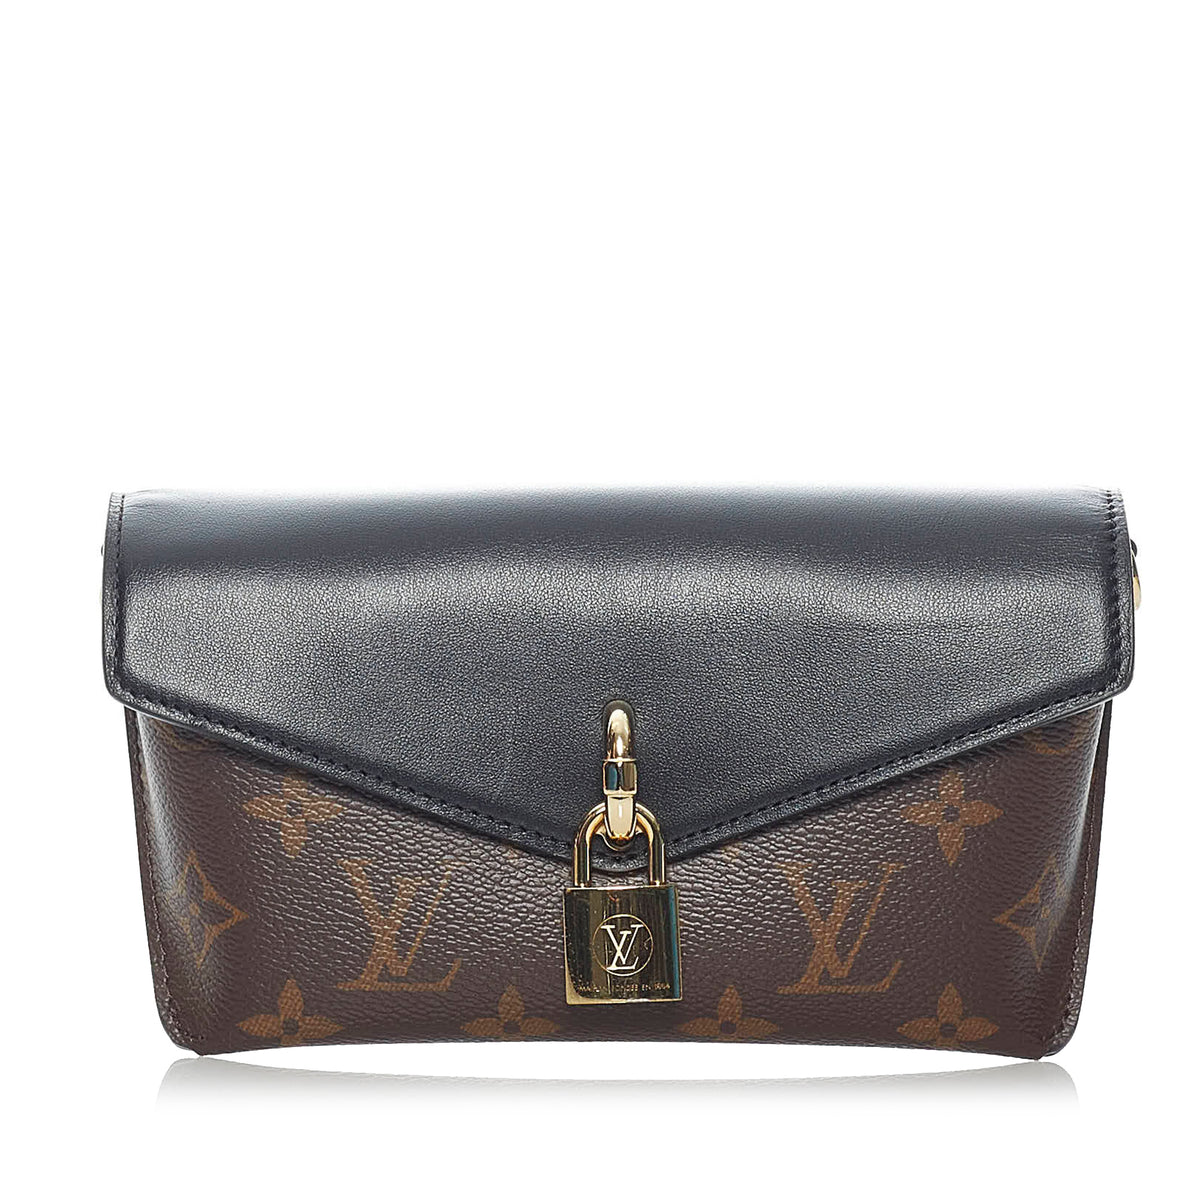 Louis Vuitton Padlock on Strap Handbag NIB, INVOICE, BOX SHIP FROM